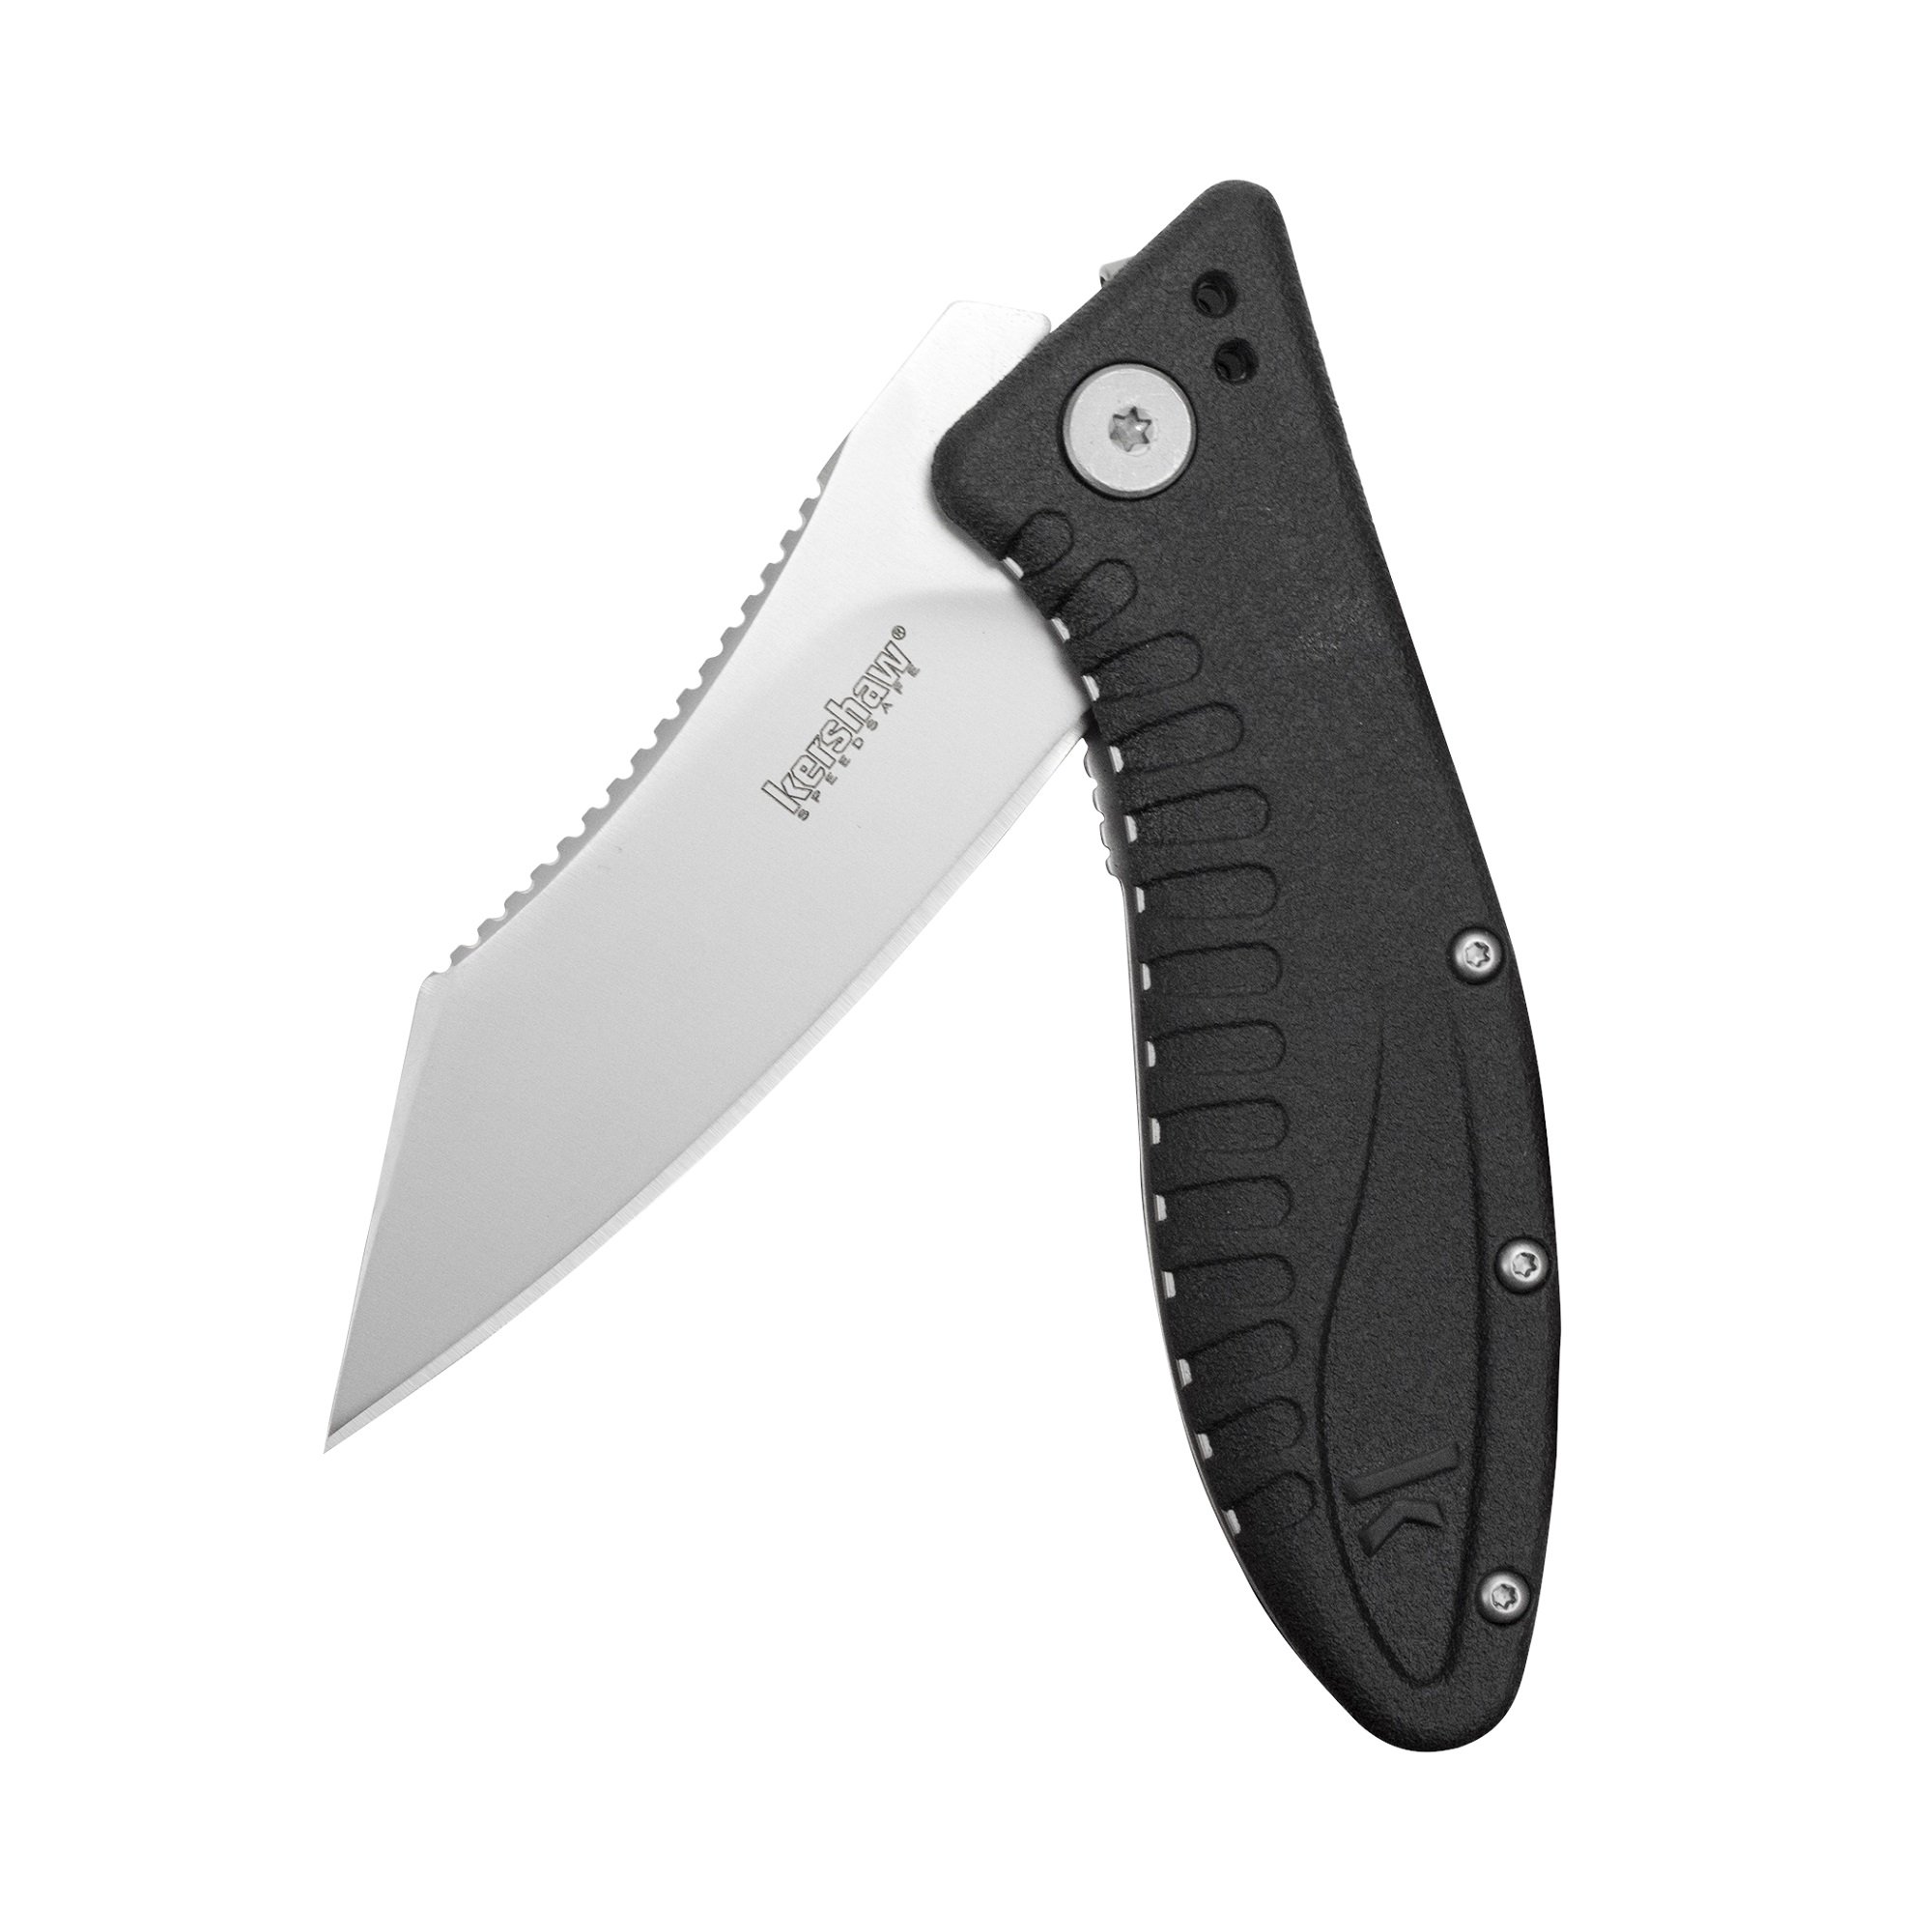 Kershaw Grinder Pocket Knife, 3.25" 4Cr13 Steel Clip Point Blade, Spring Assisted Opening EDC Folding Utility Knife,Black - $23.27